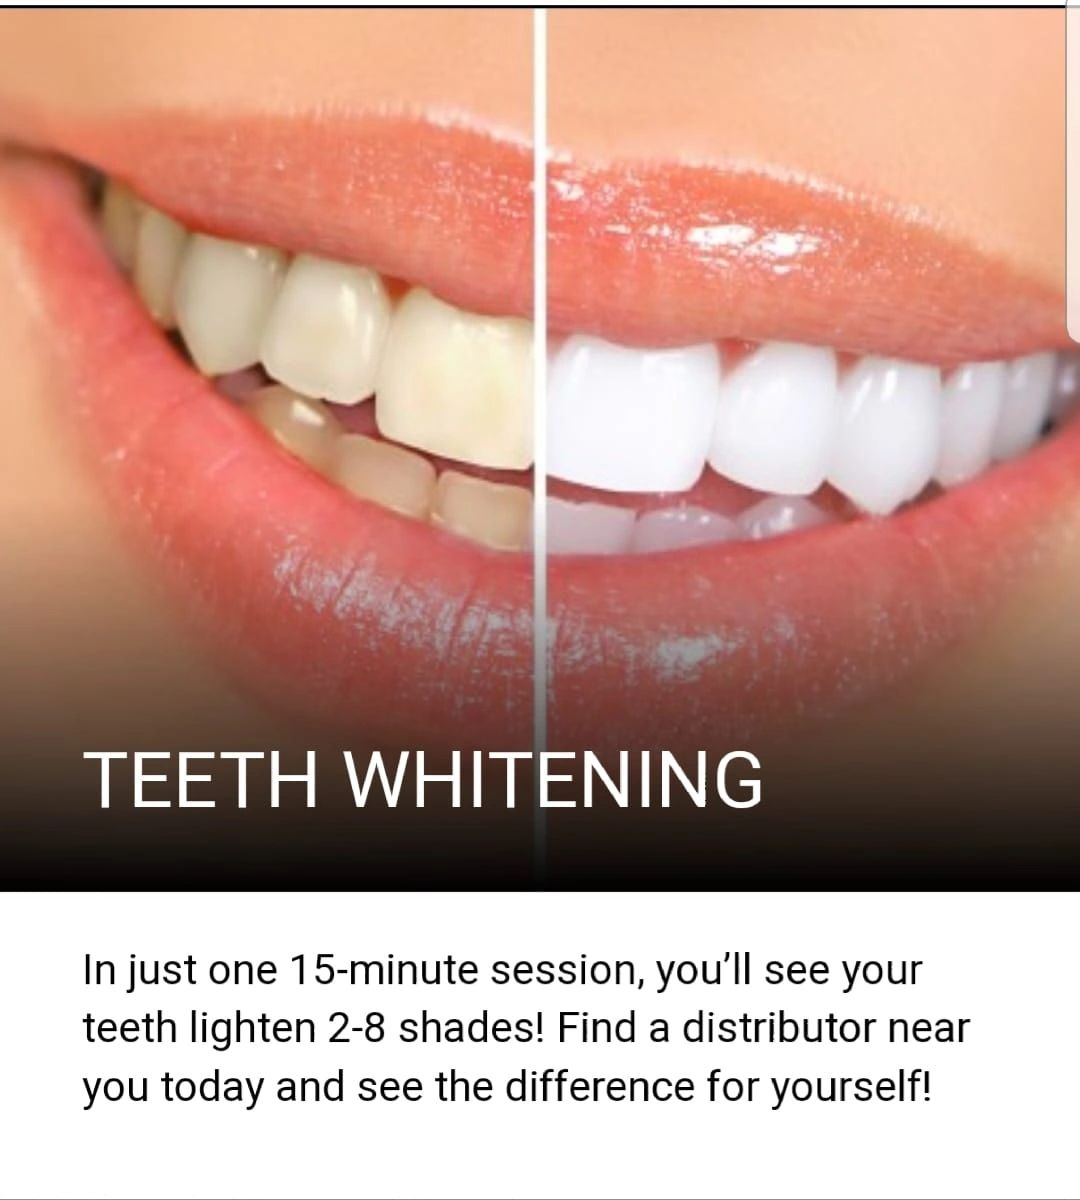 BleachBright Teeth Whitening